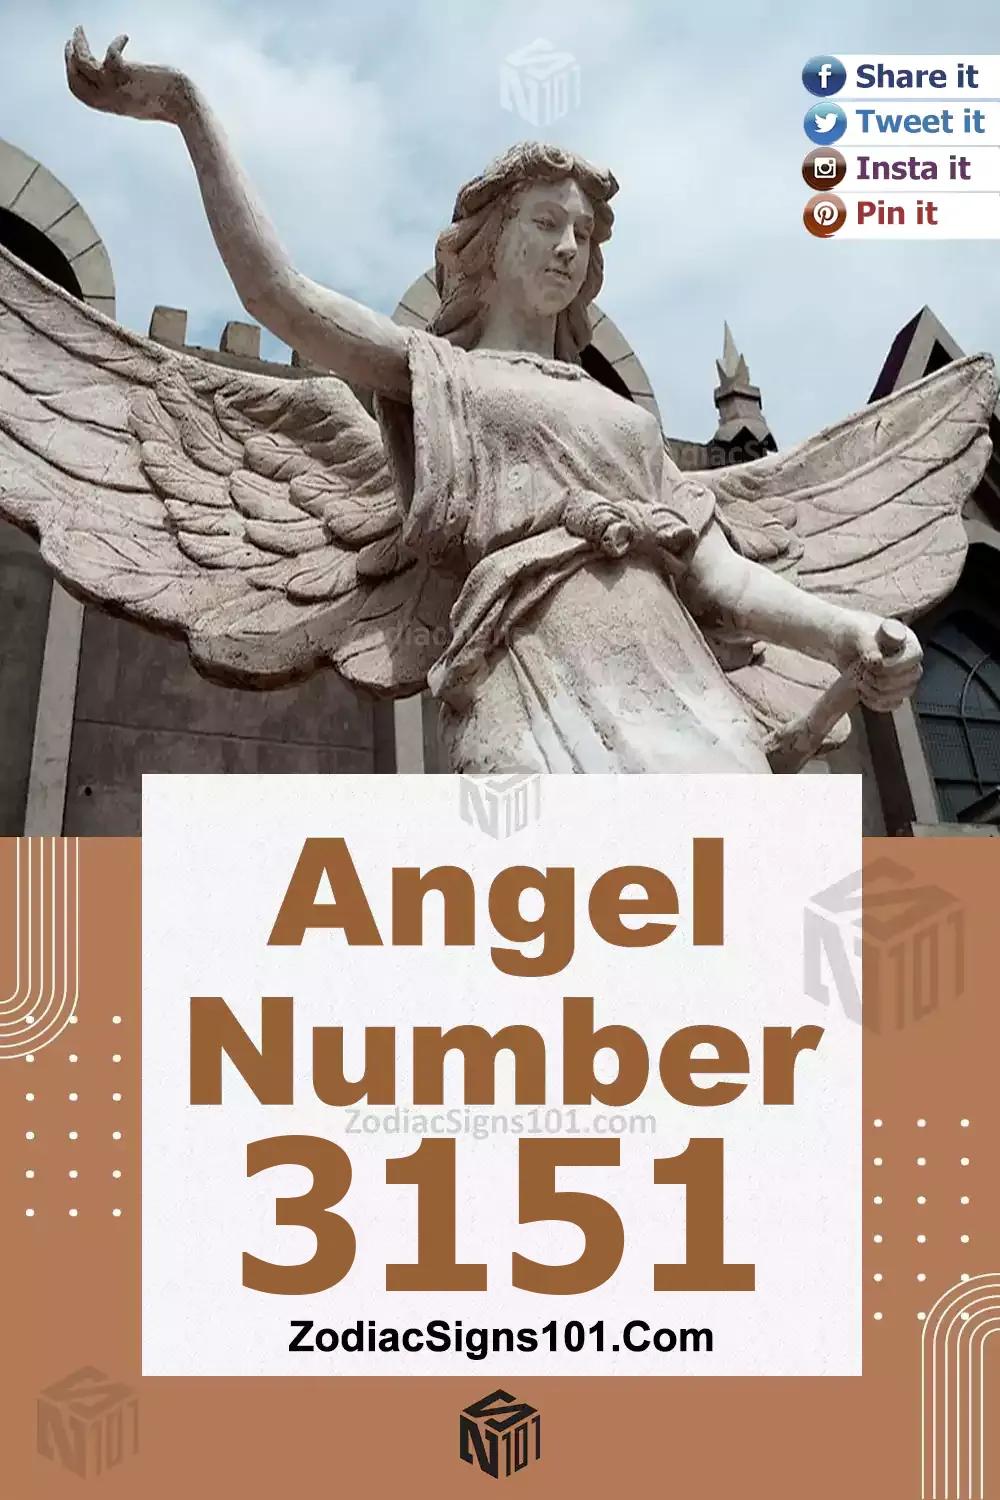 3151-Angel-Number-Meaning.jpg